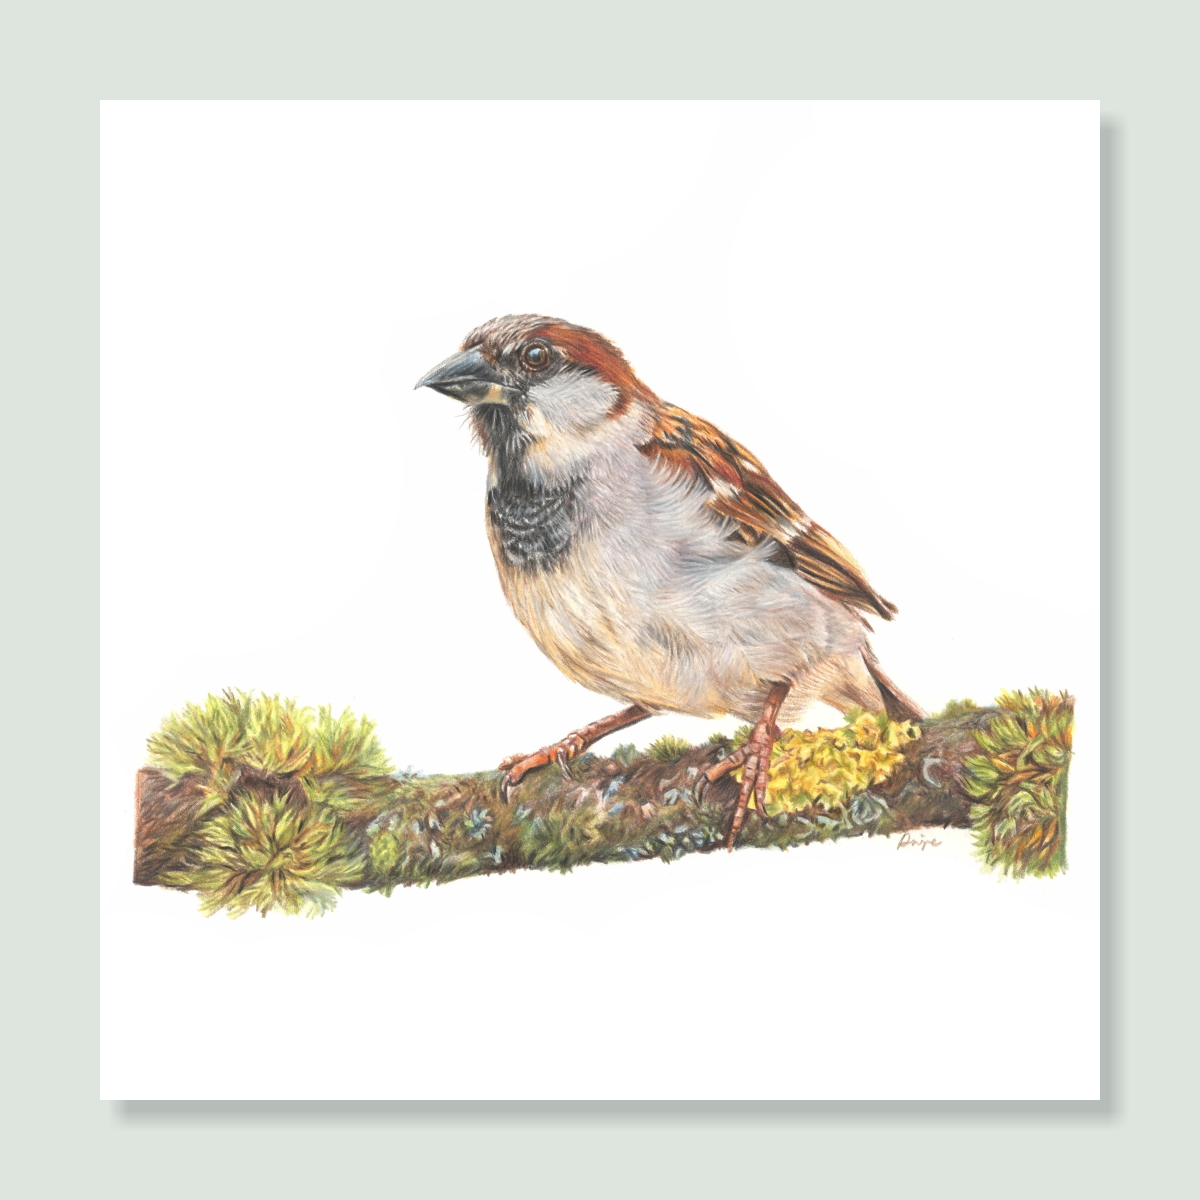 UK Garden Bird Collection - Sparrow study by wildlife artist Angie.